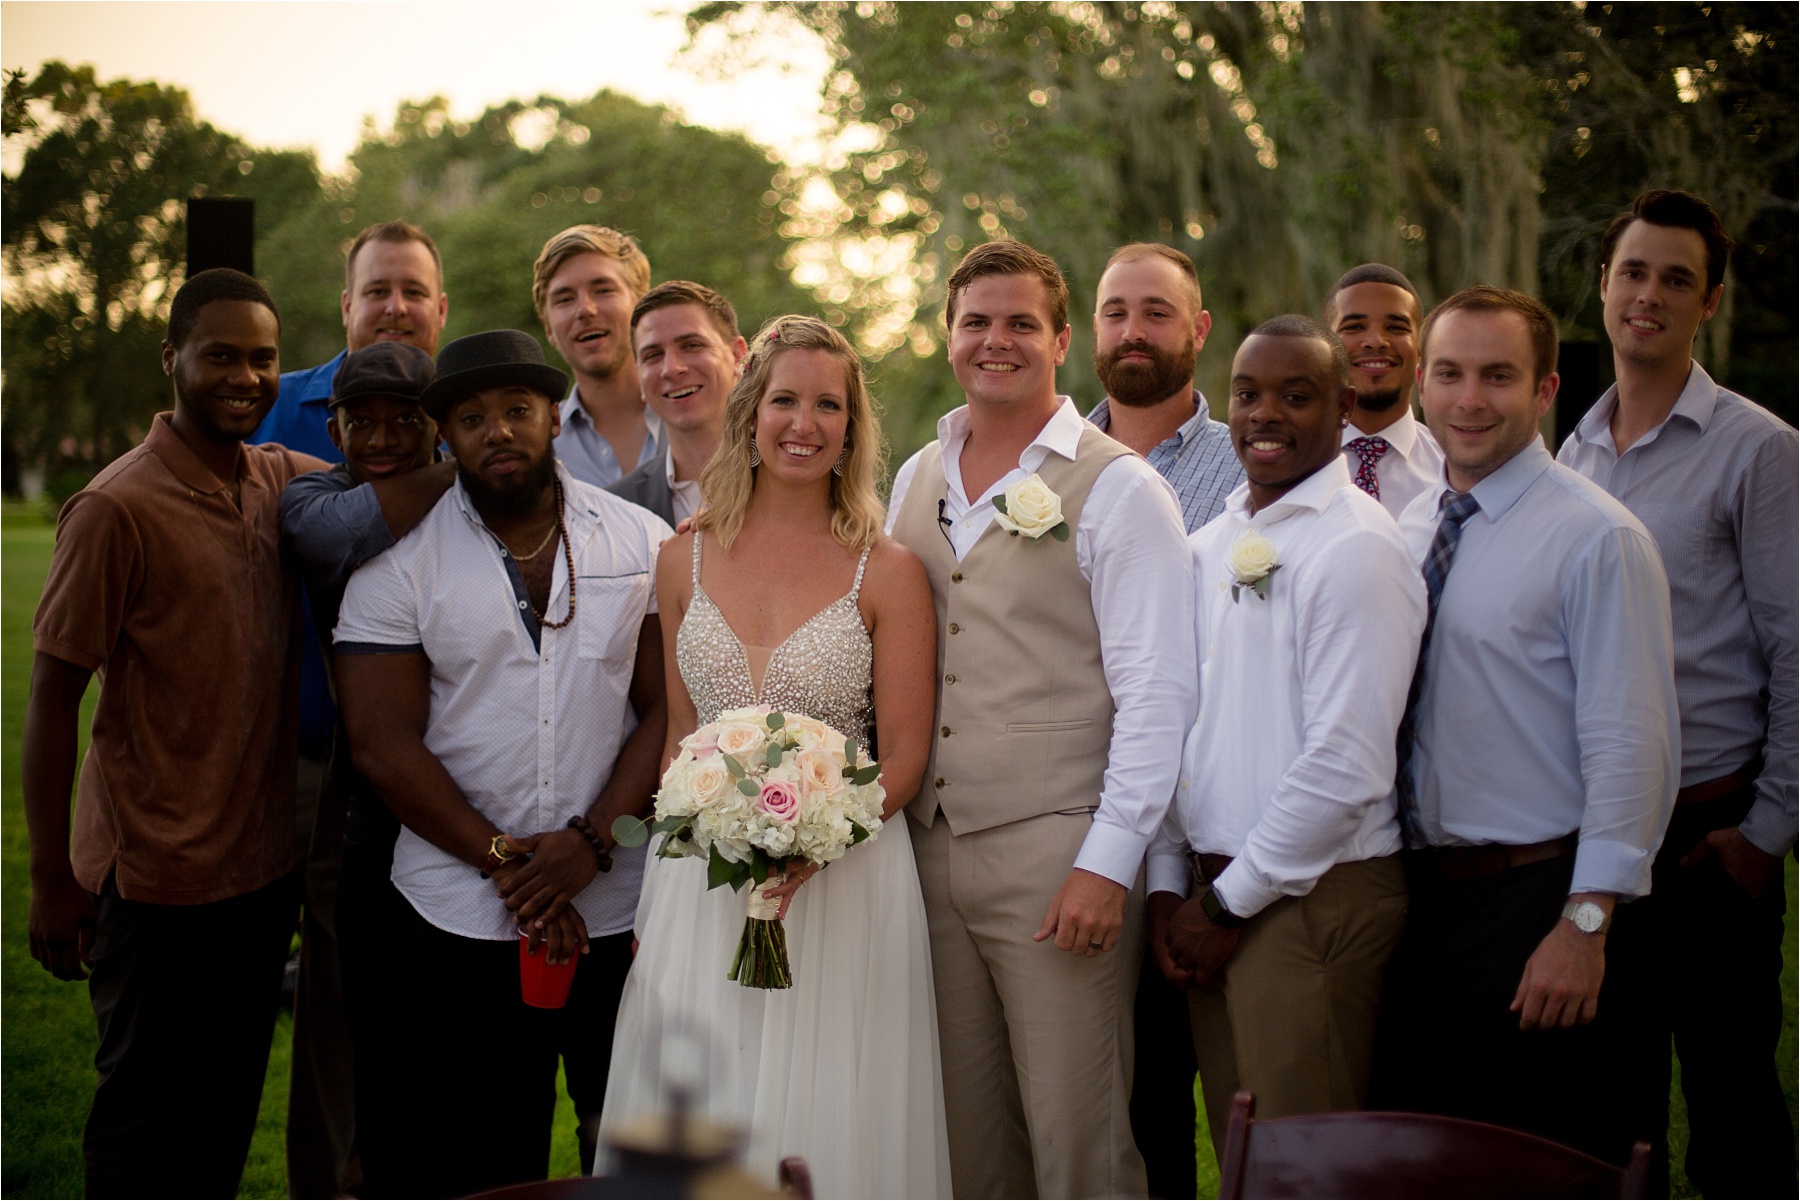 Backyard Wedding_Winter Springs, FL_Tampa Wedding Photographer